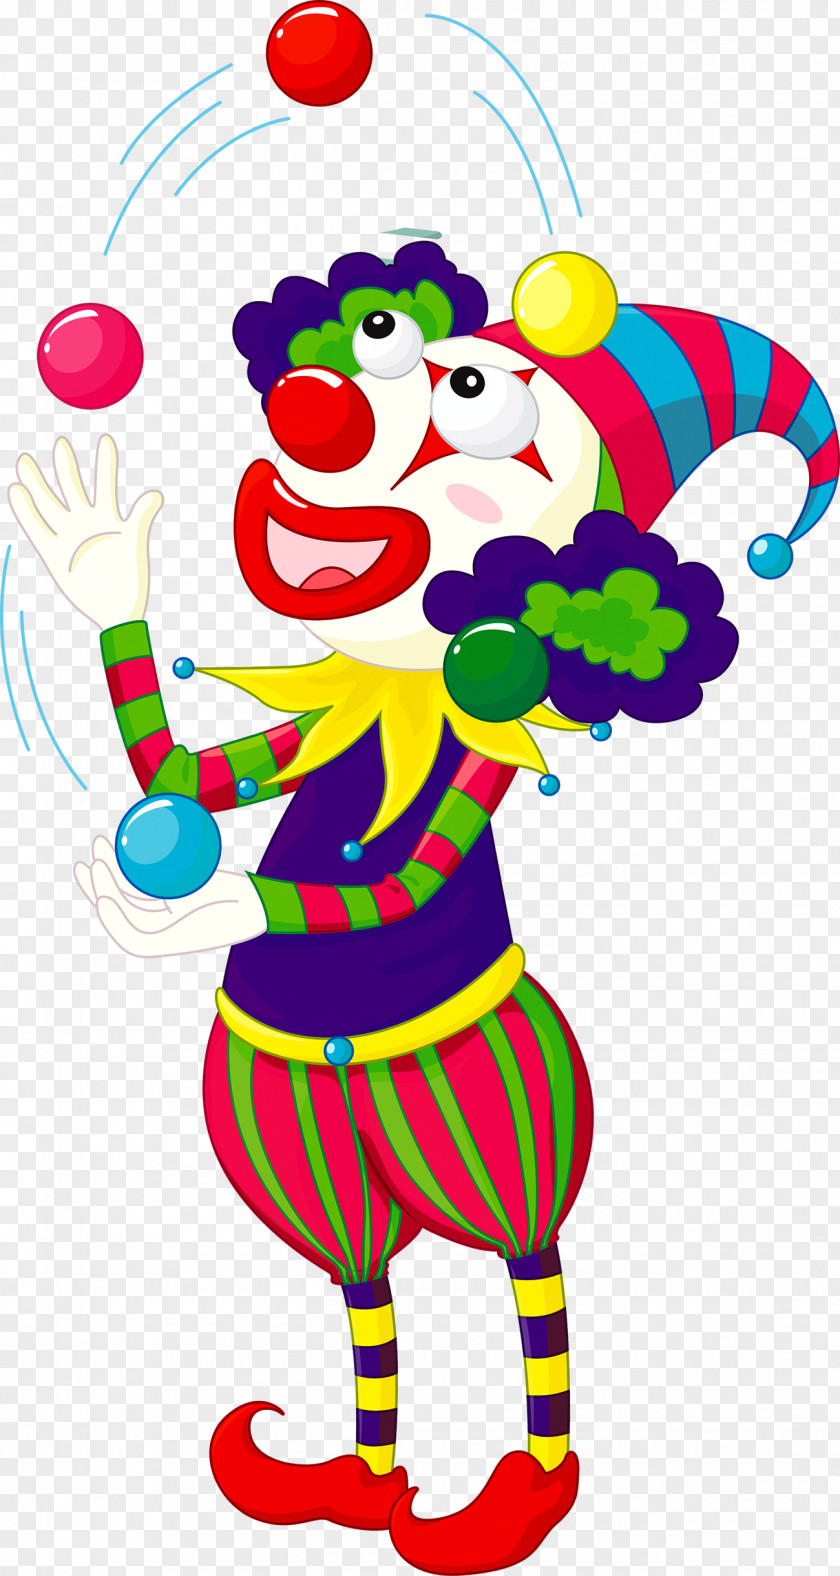 Circus Clown Juggling Illustration PNG